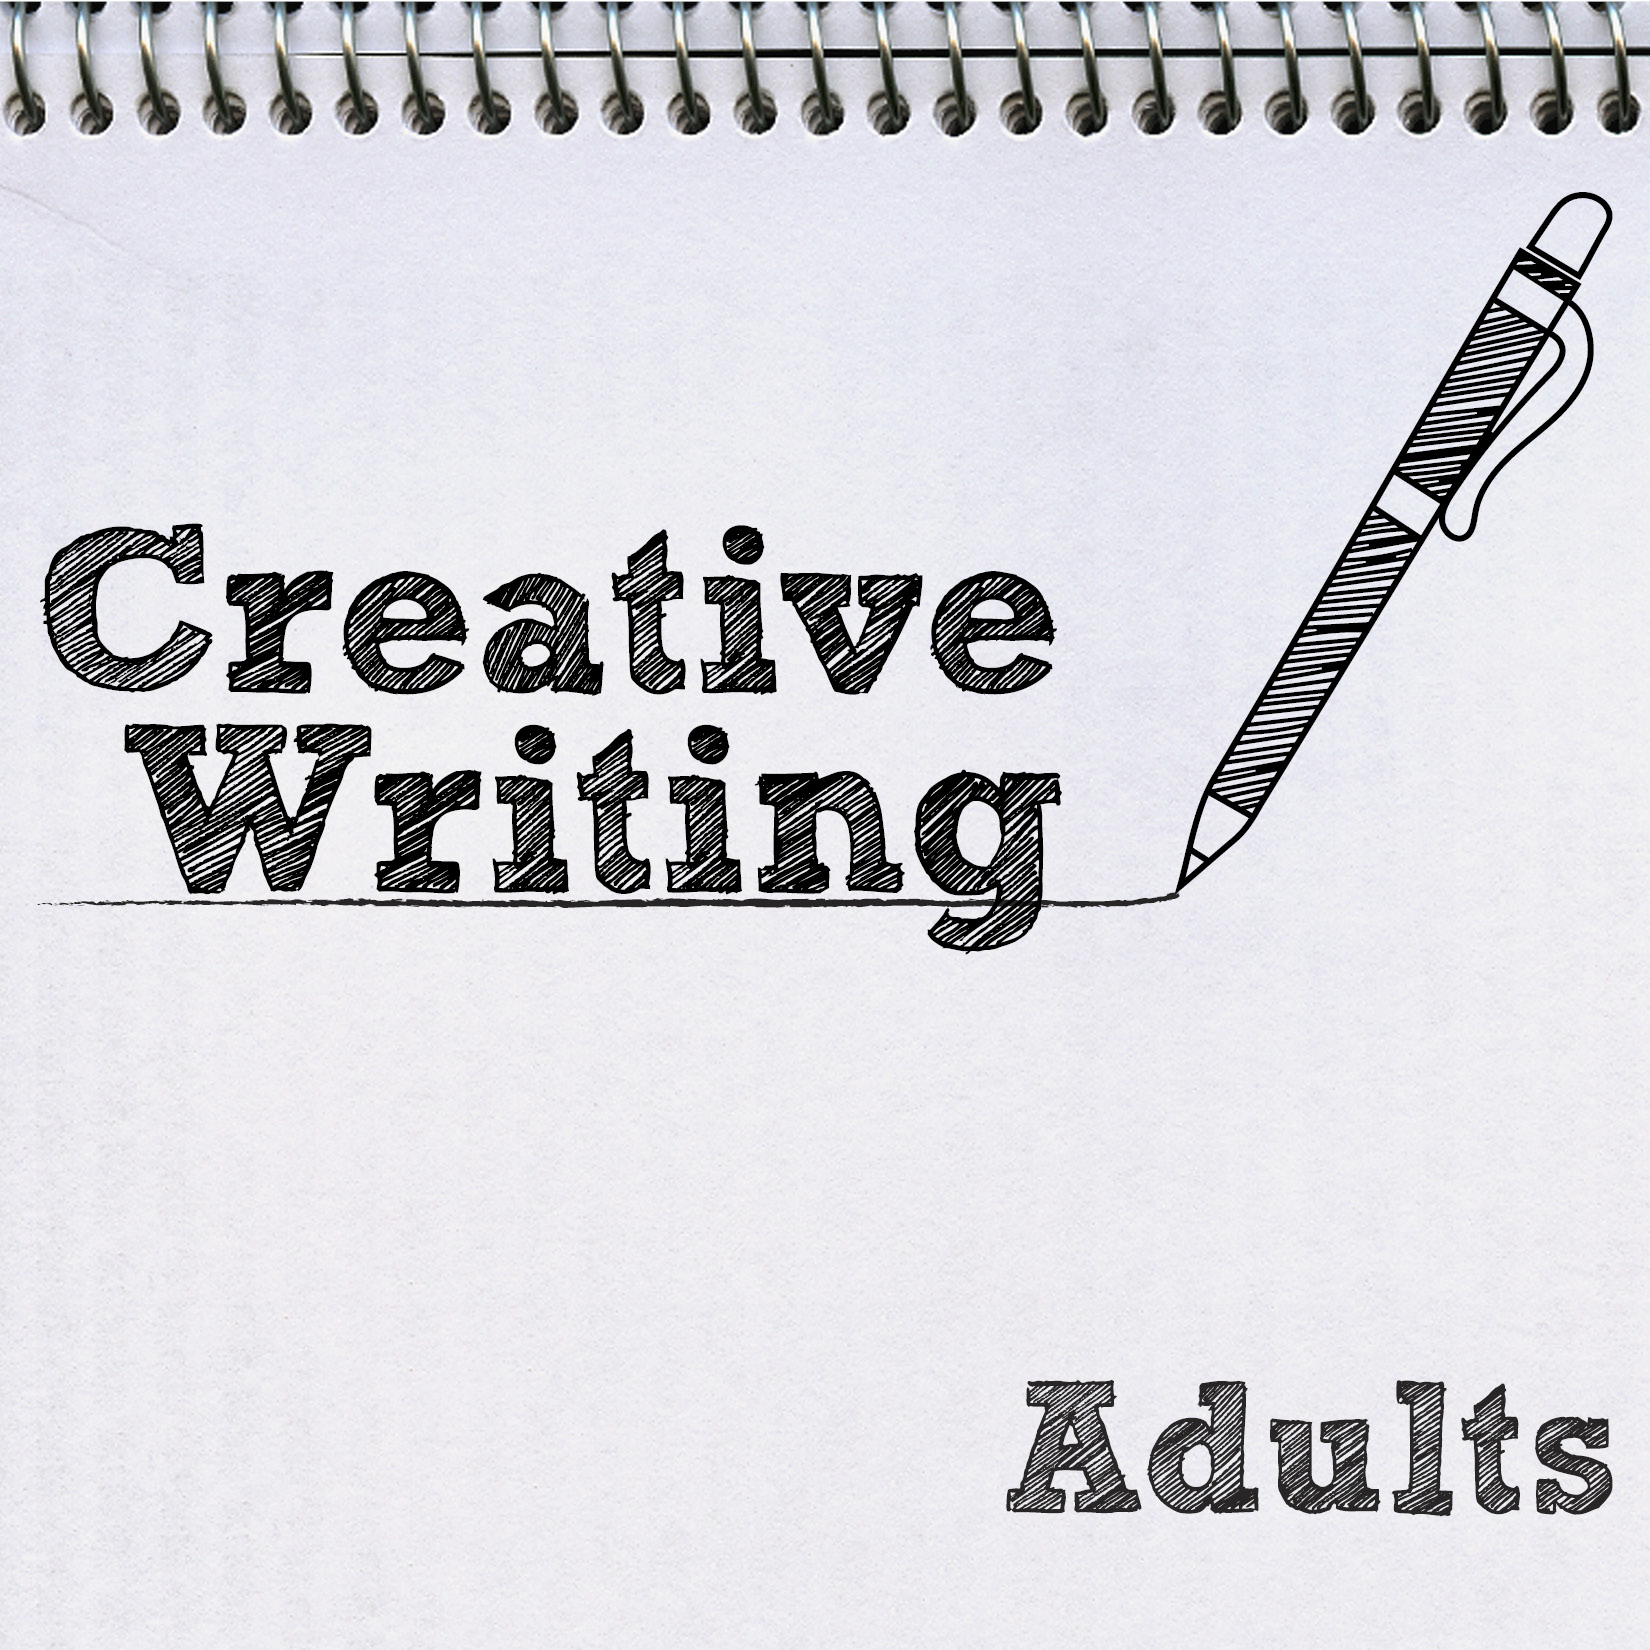 free creative writing